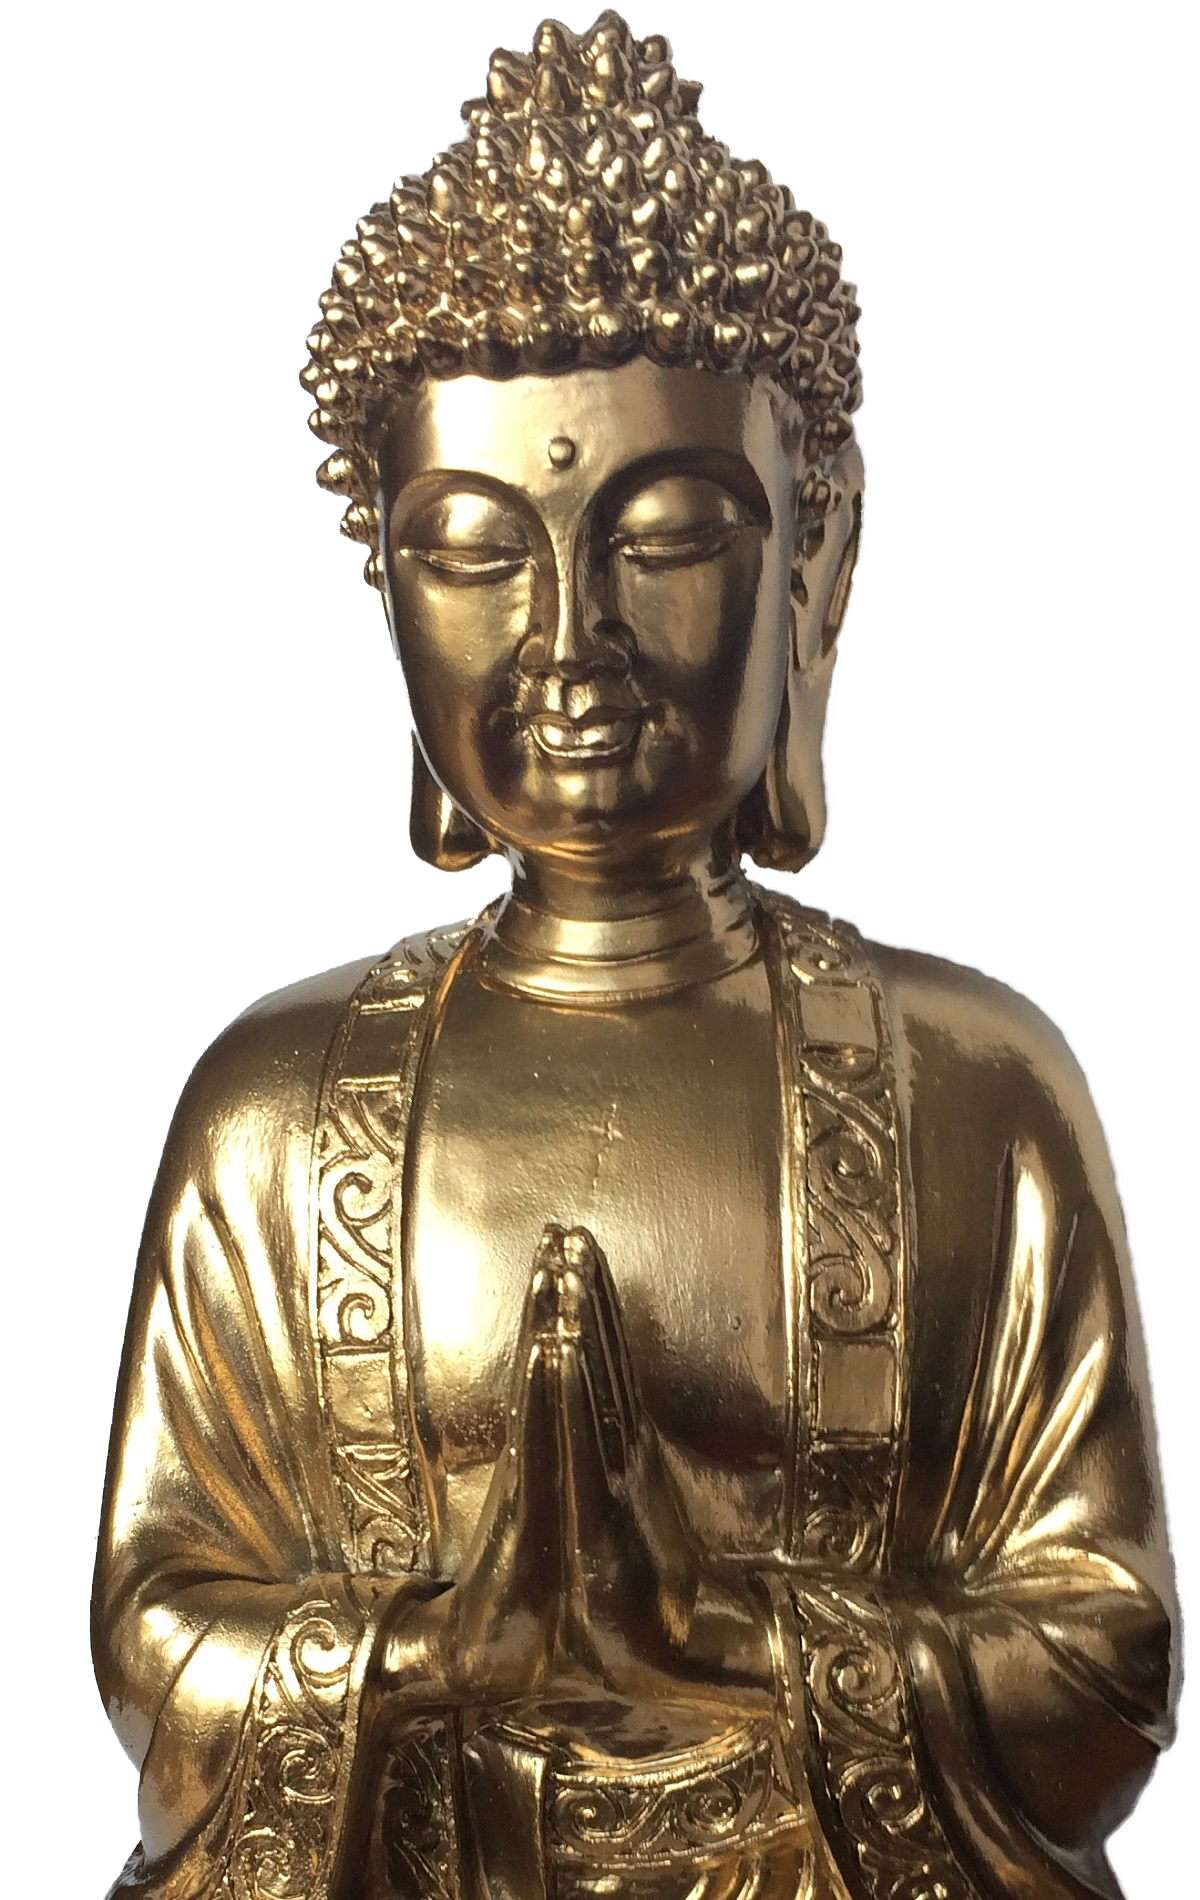 grand-bouddha-dore-en-meditation-pei-17777-sgrbdore-1496506184